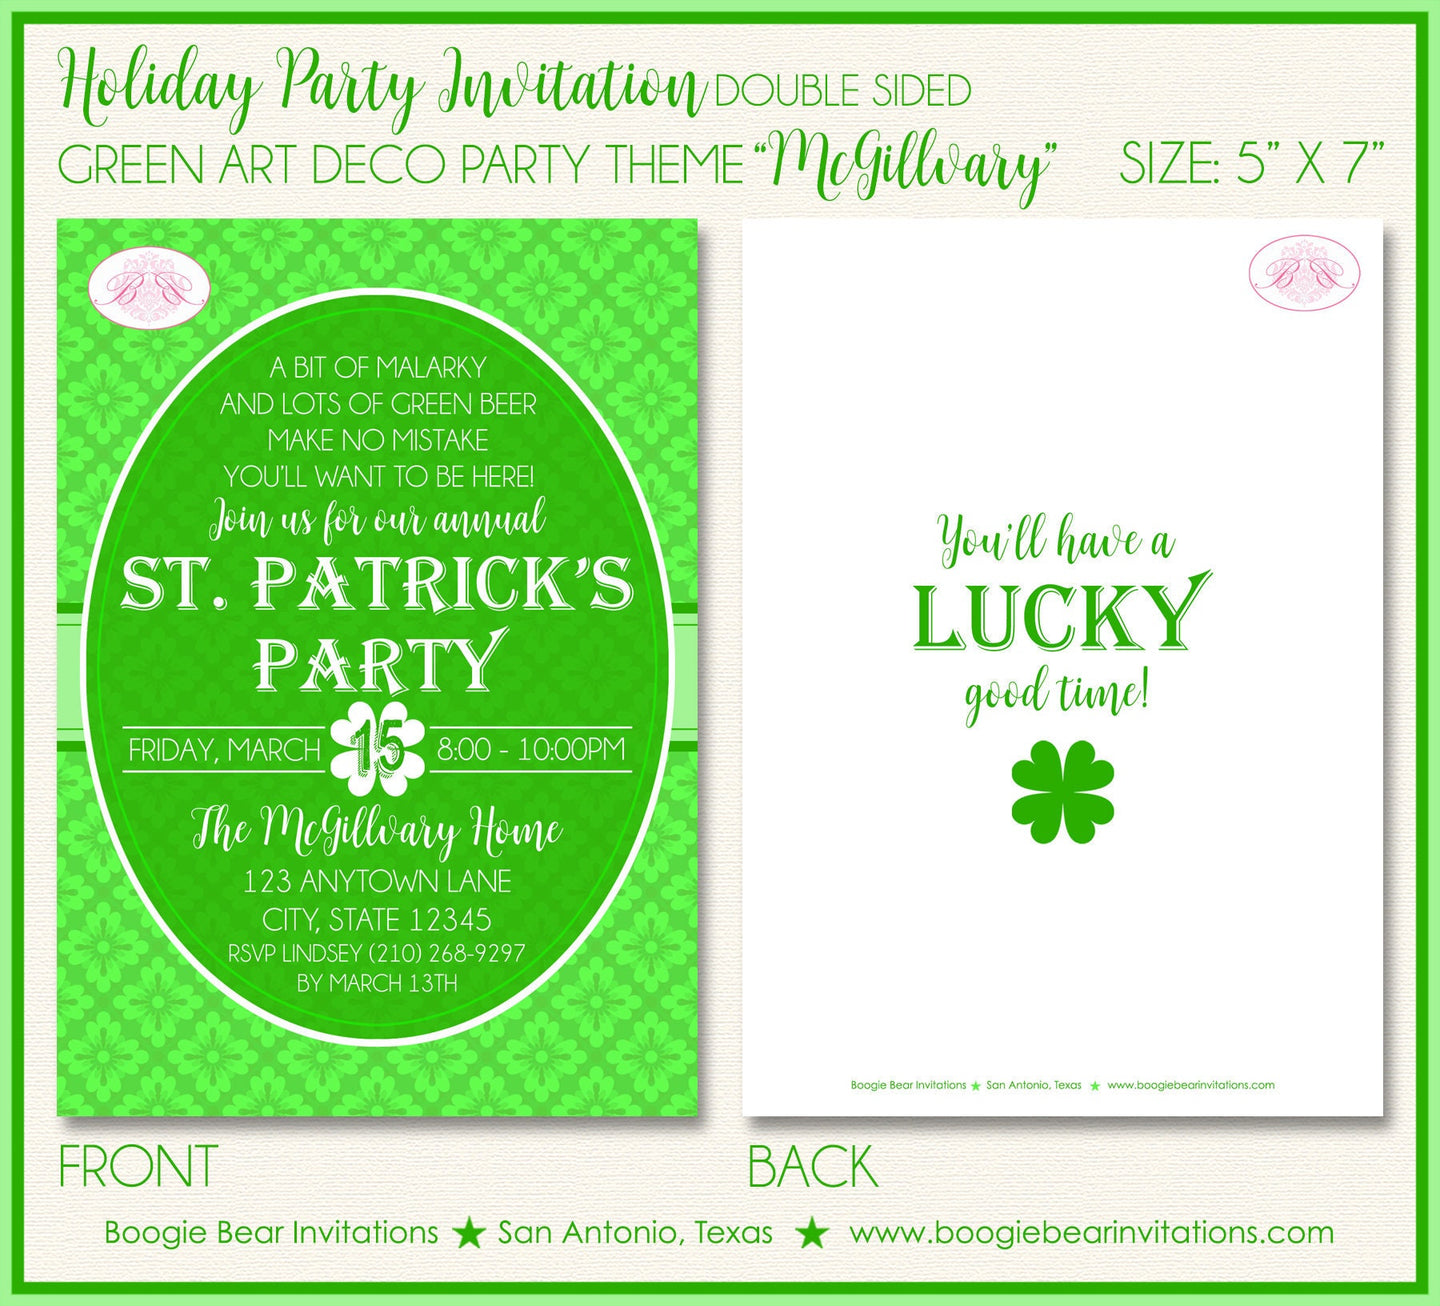 St. Patrick's Day Party Invitation Irish Green Lucky Shamrock Art Deco Boogie Bear Invitations McGillvary Theme Paperless Printable Printed